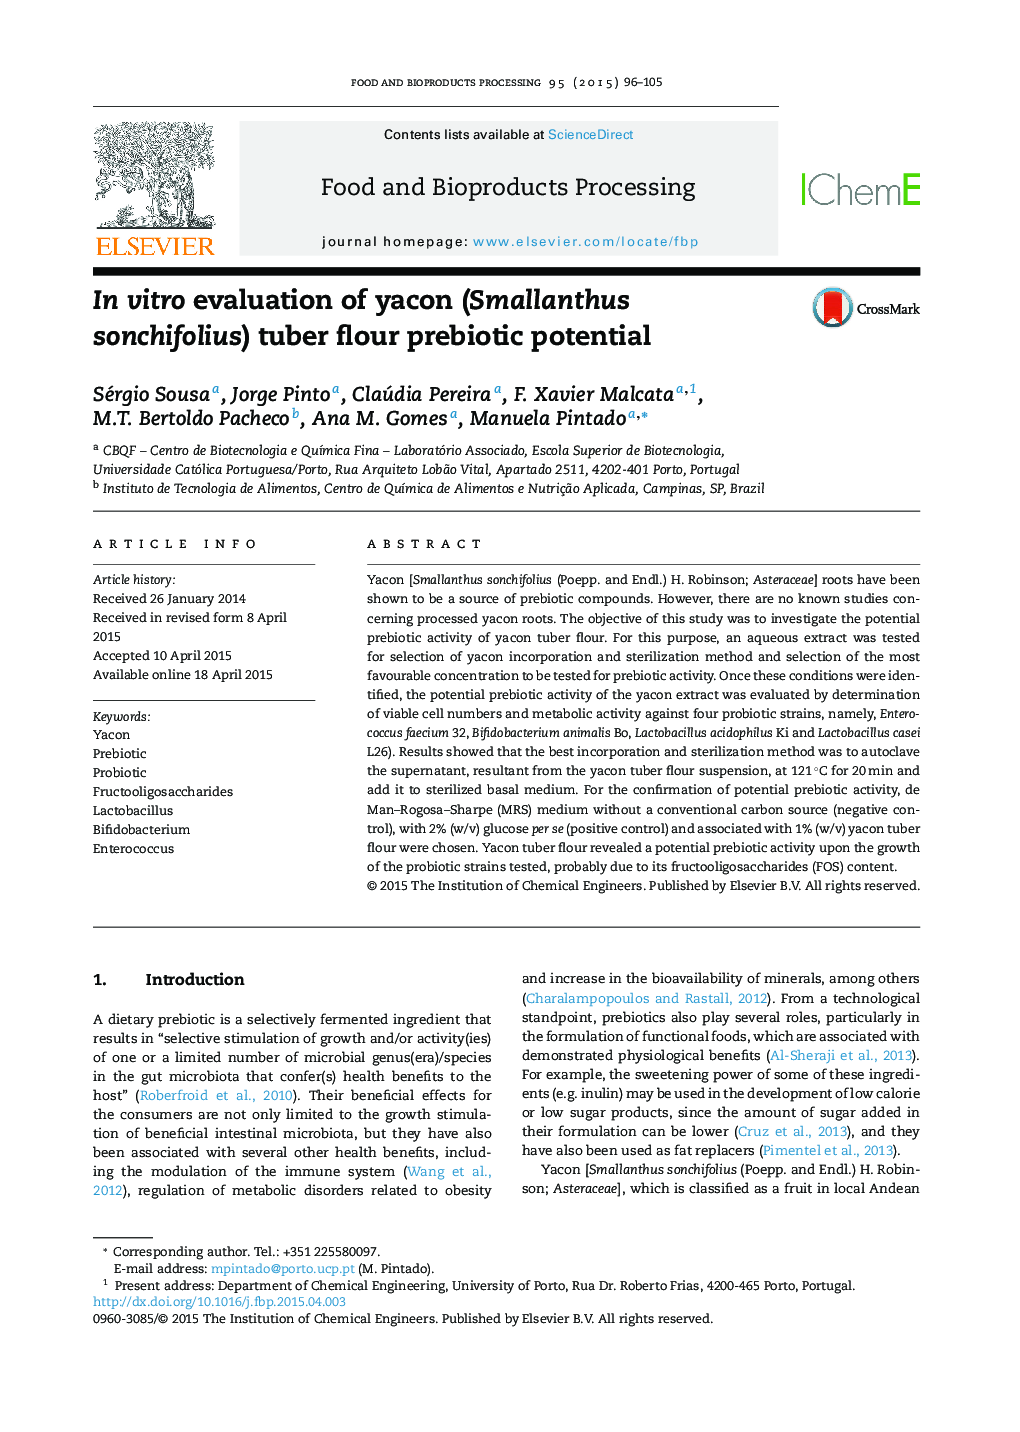 In vitro evaluation of yacon (Smallanthus sonchifolius) tuber flour prebiotic potential